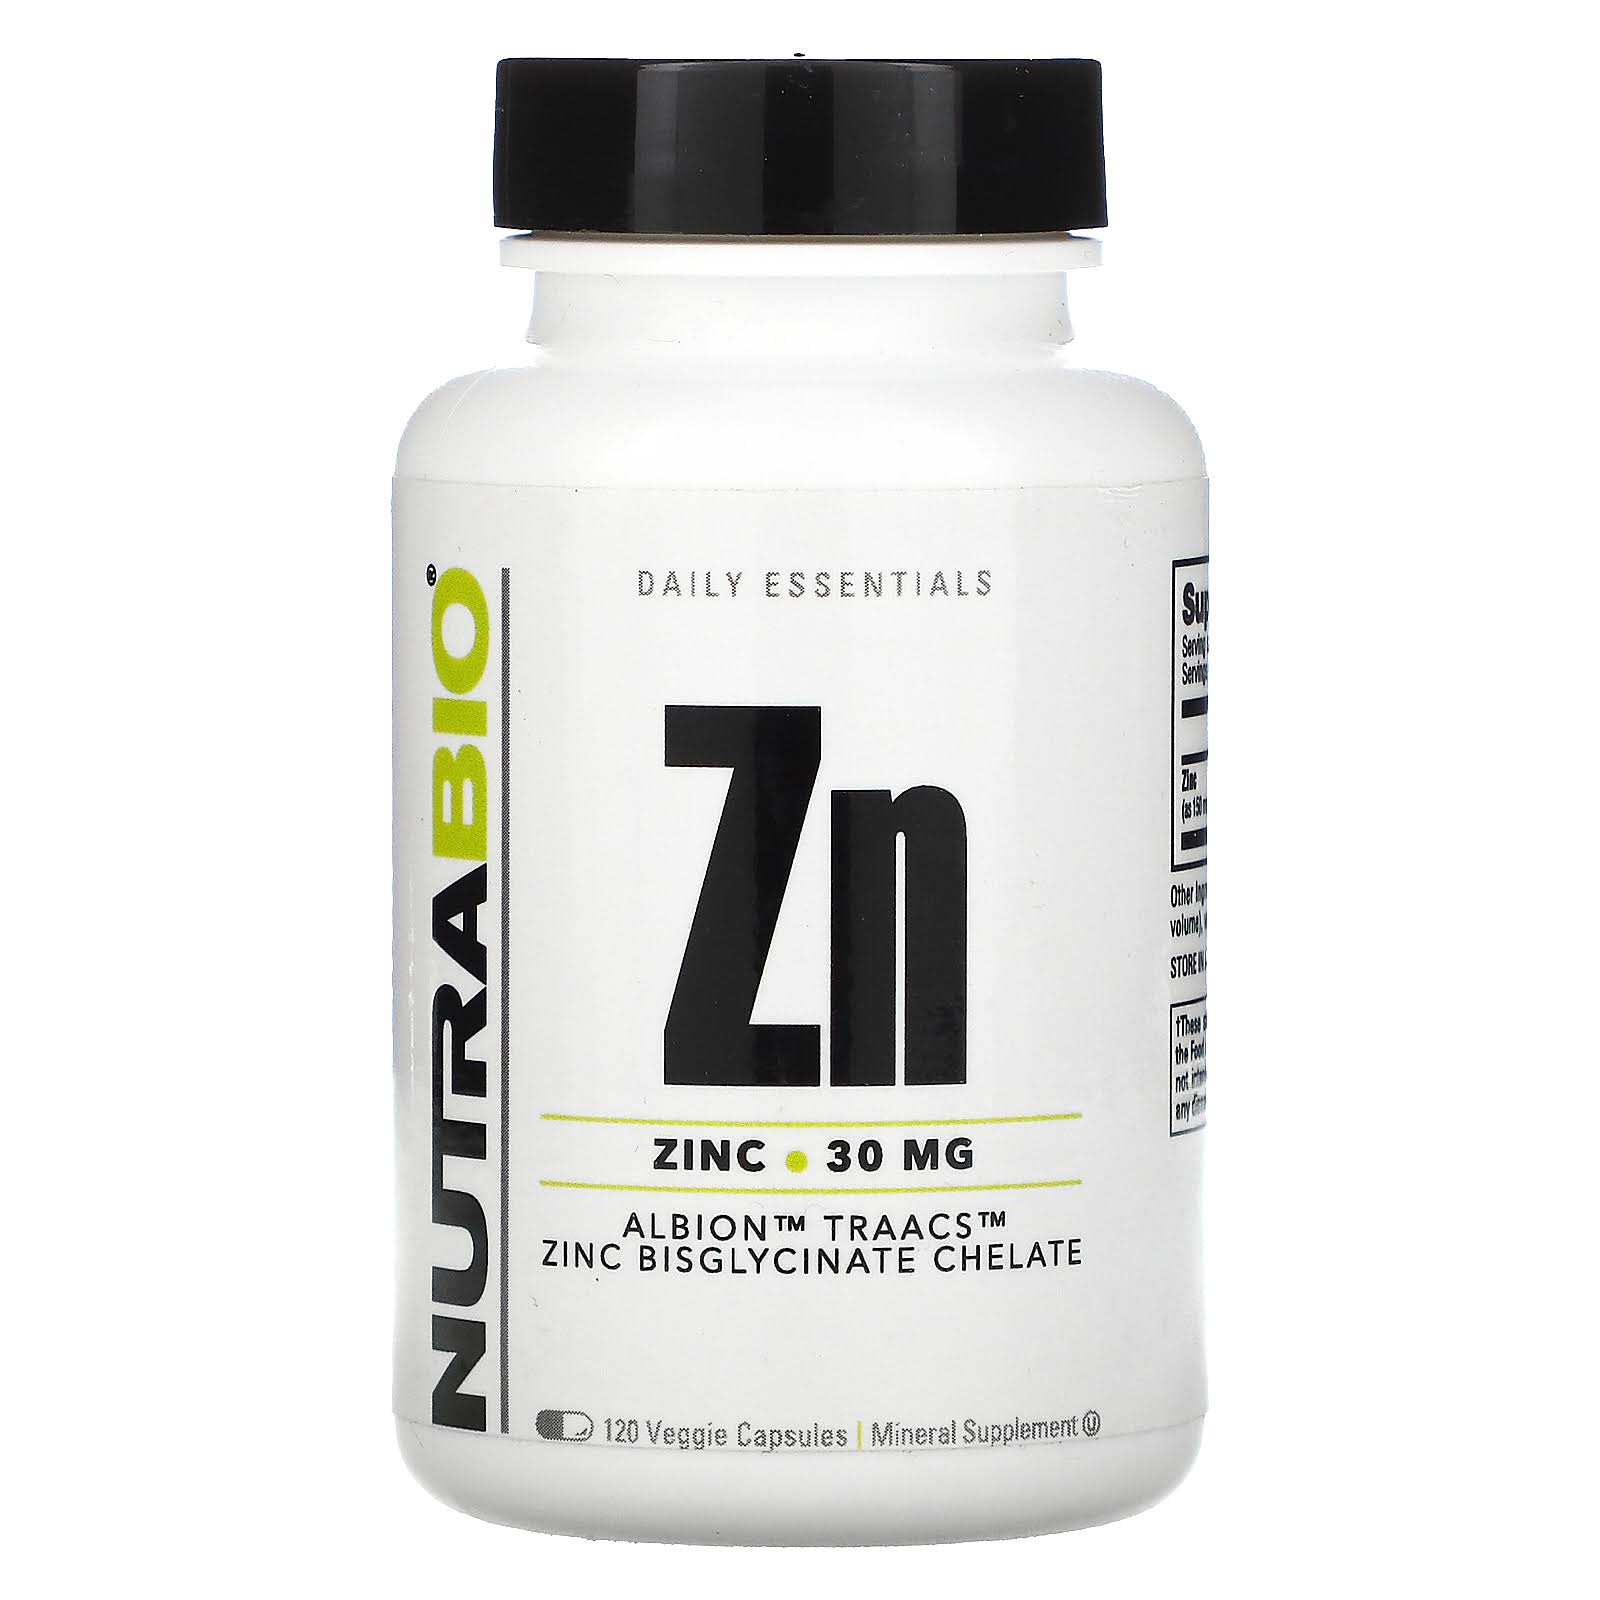 Nutrabio Zinc Chelated Dietary Supplement - 30mg, 120ct